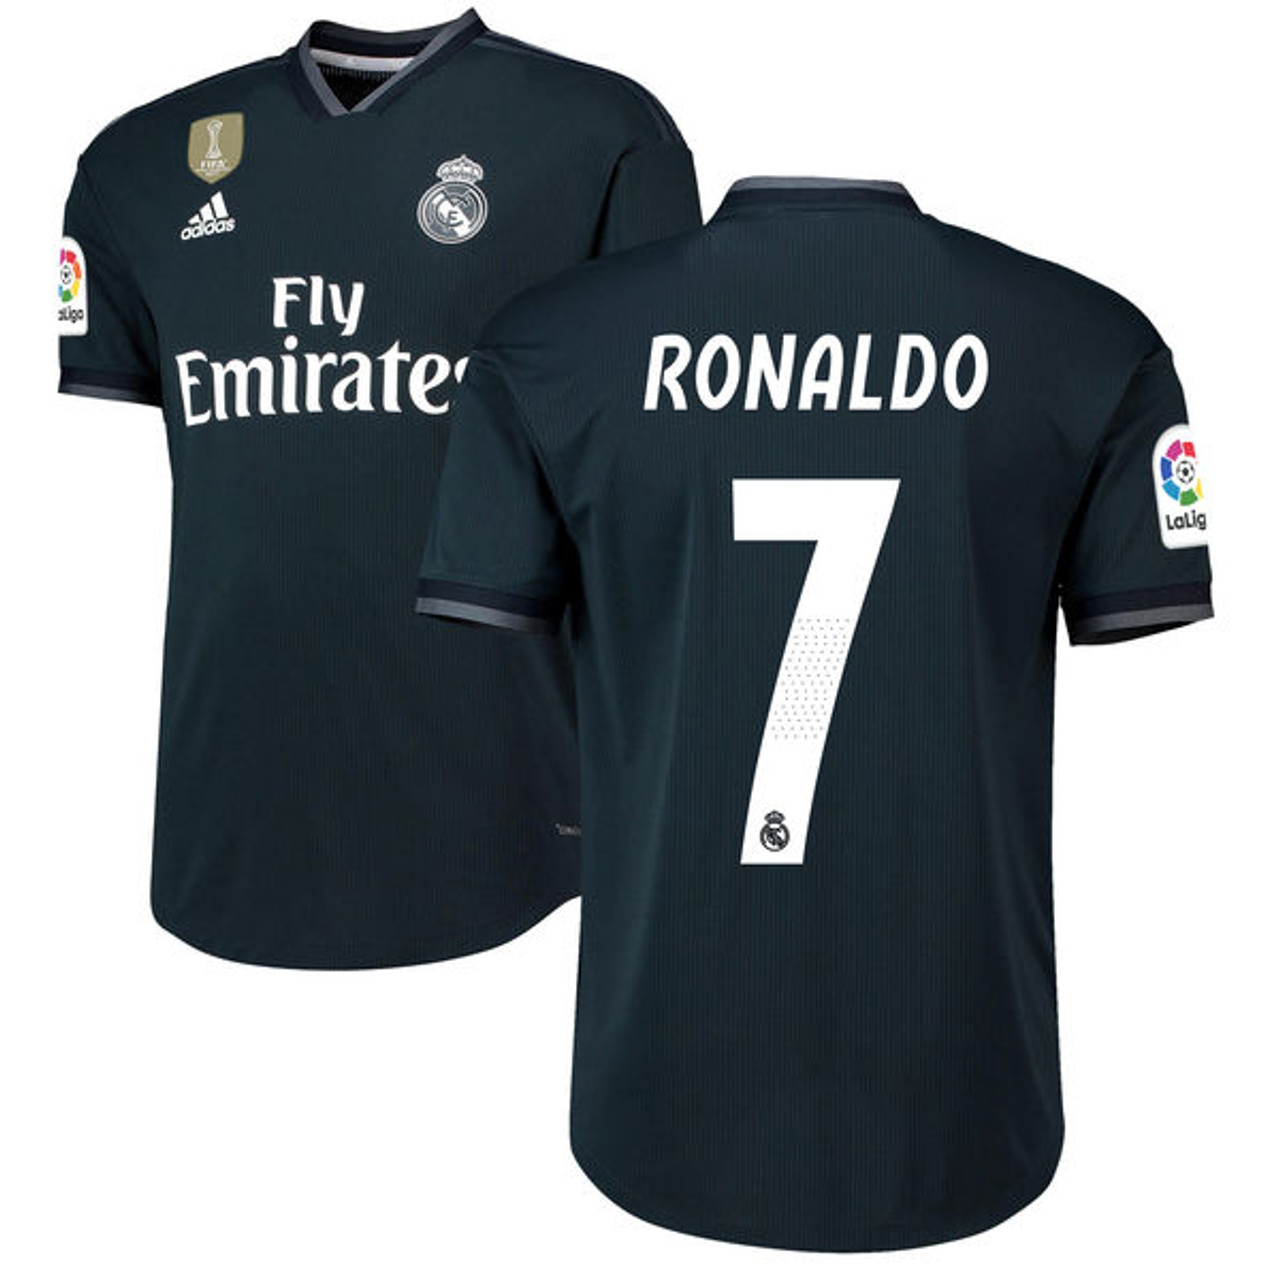 ADIDAS REAL MADRID 2019 AWAY RONALDO JERSEY - Soccer Plus